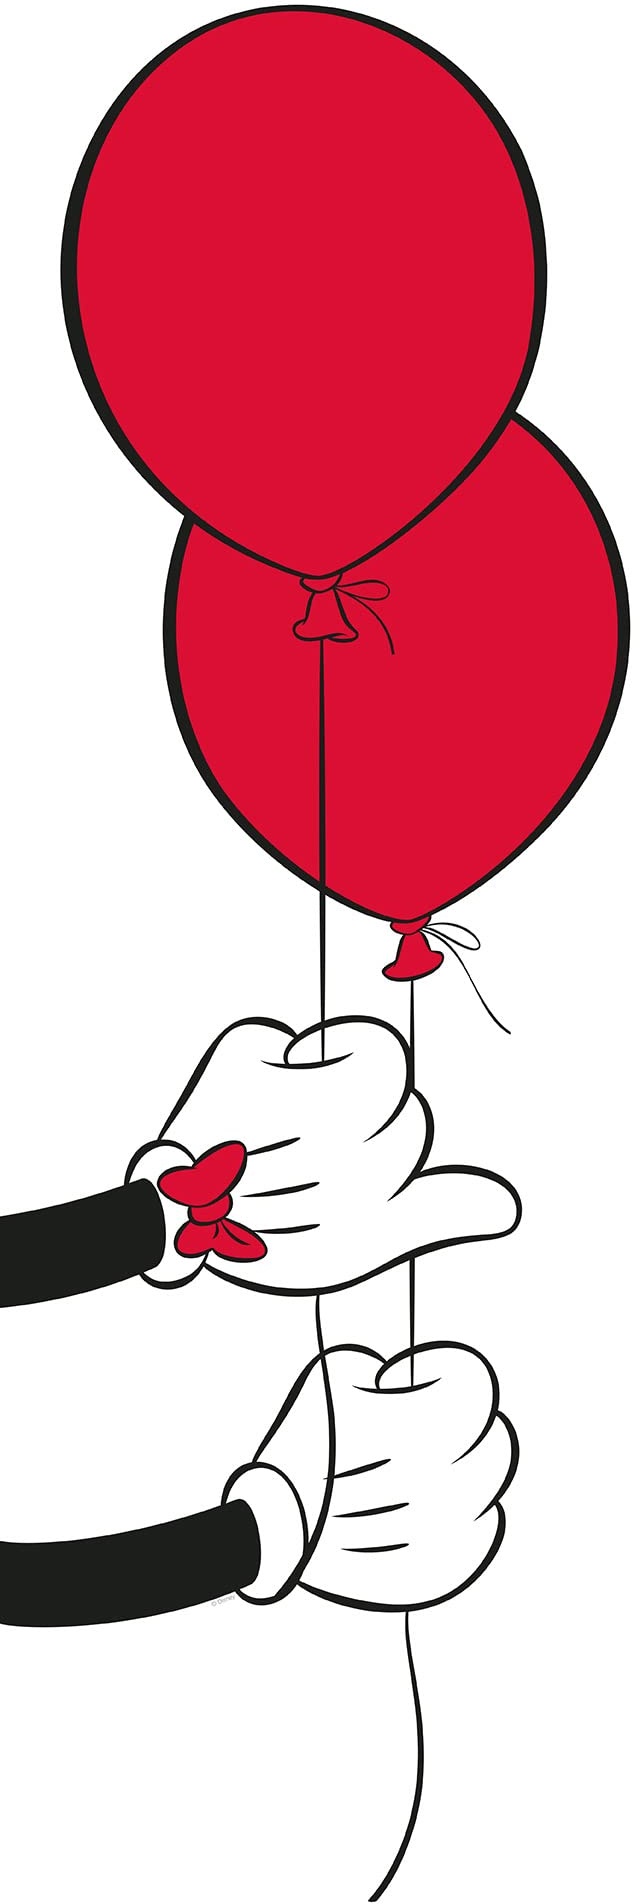 Komar Mickey Mouse Balloon - Größe: 50 x 70 cm, Wandbild, Poster, Kunstdruck (ohne Rahmen), Disney